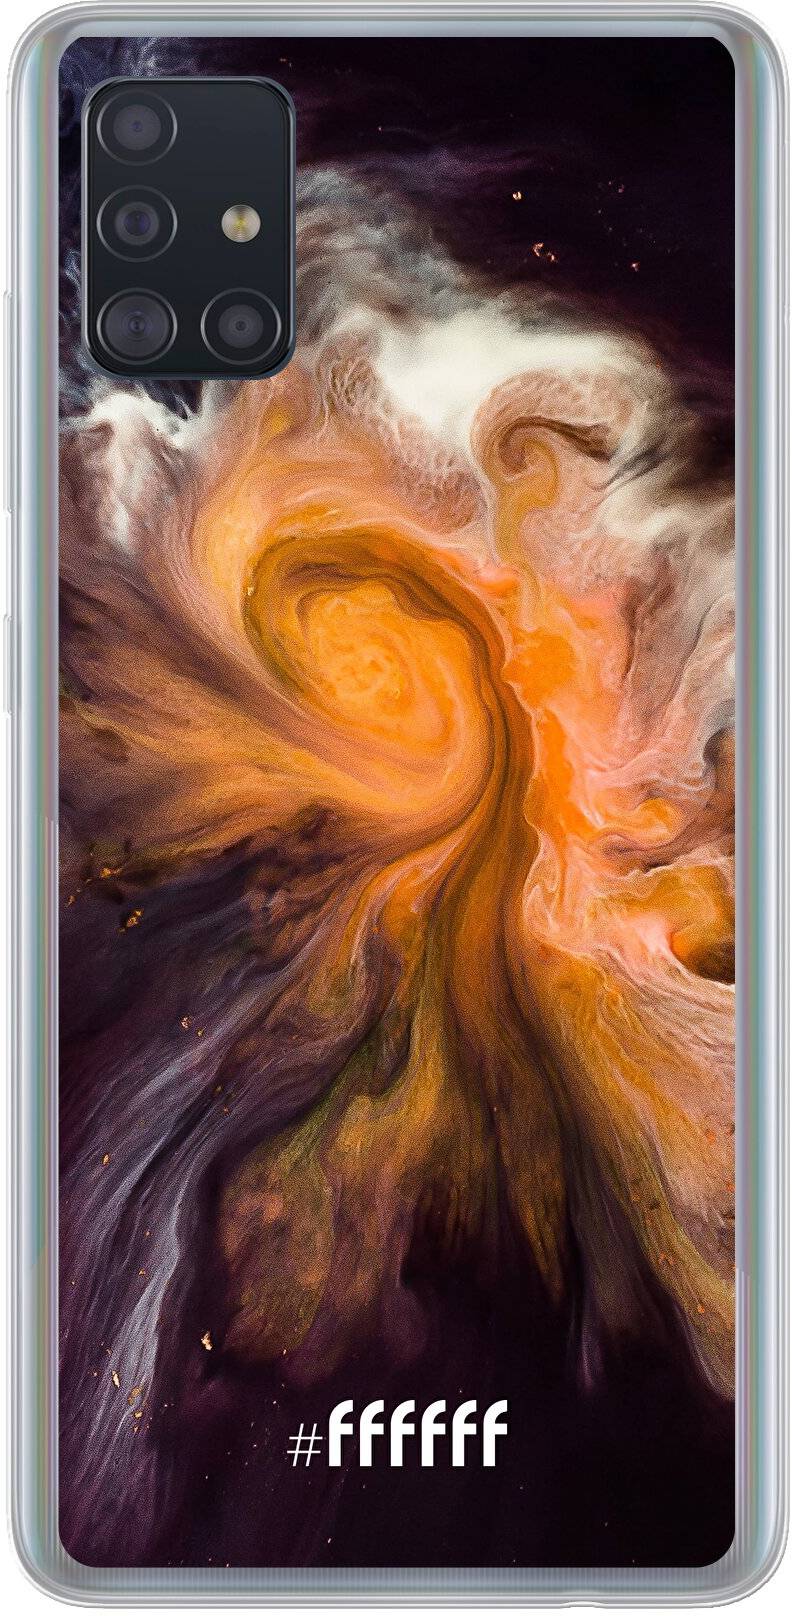 Crazy Space Galaxy A51